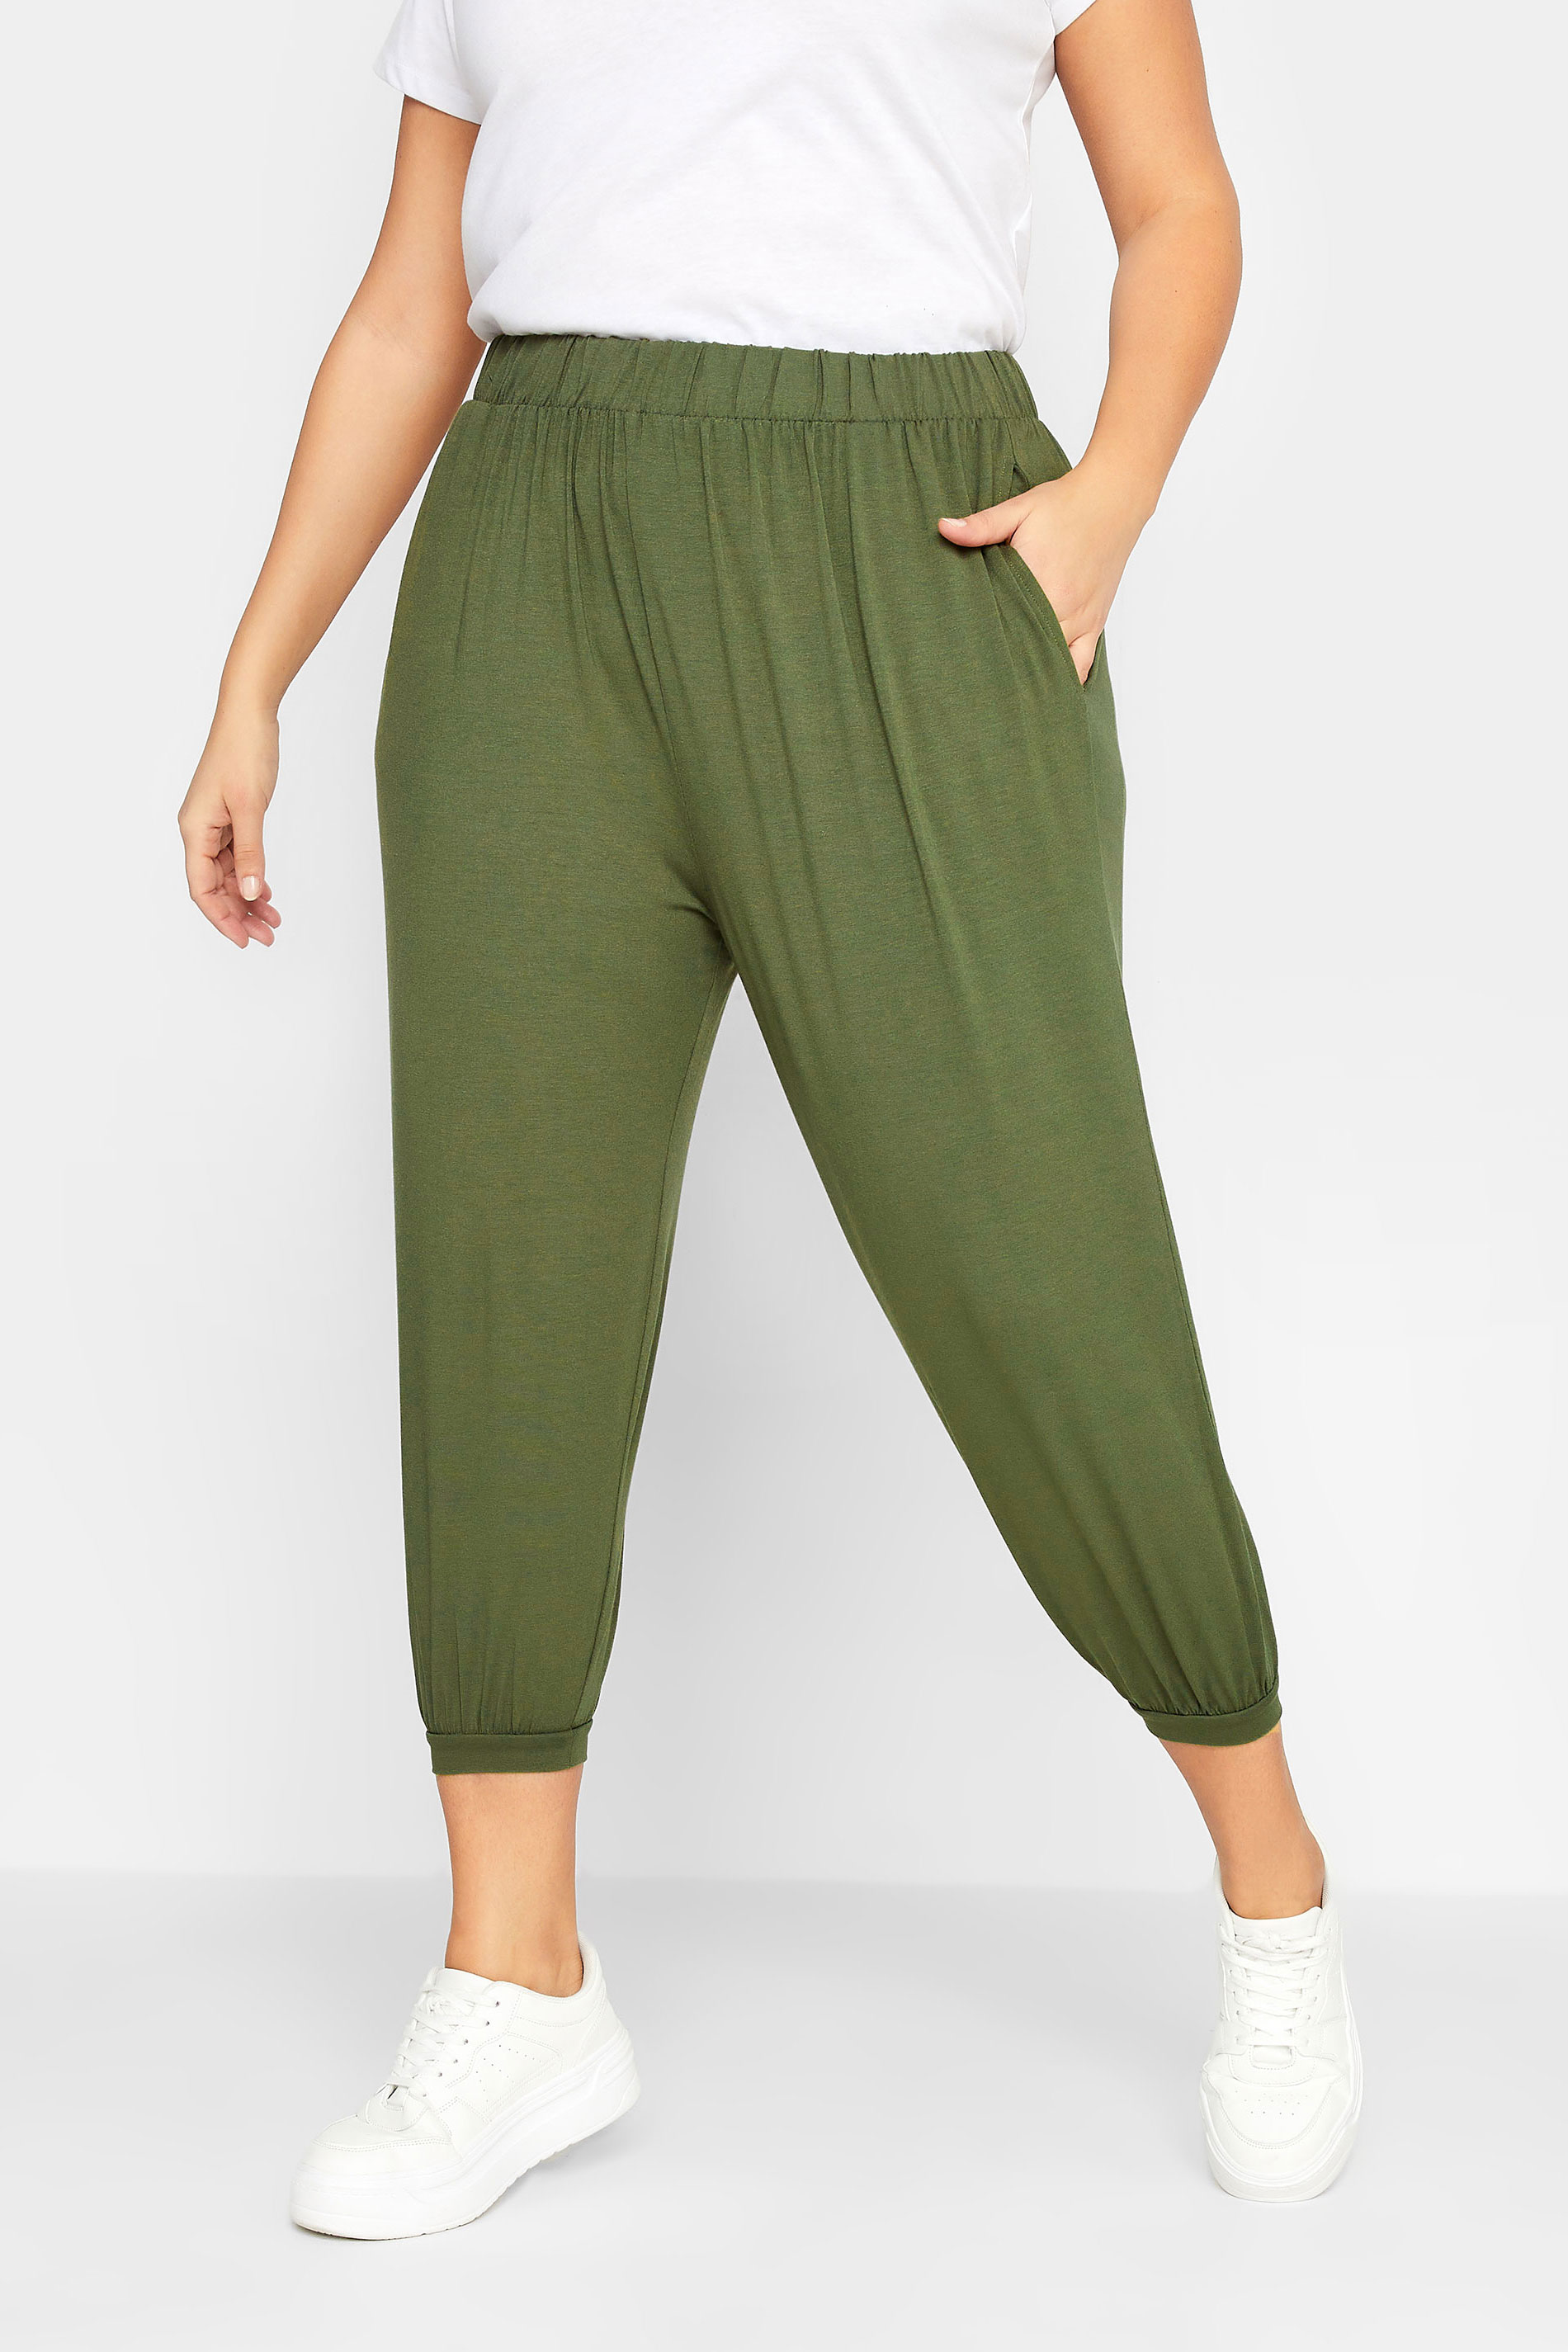 Plus Size Khaki Green Cropped Jersey Harem Joggers | Yours Clothing 1